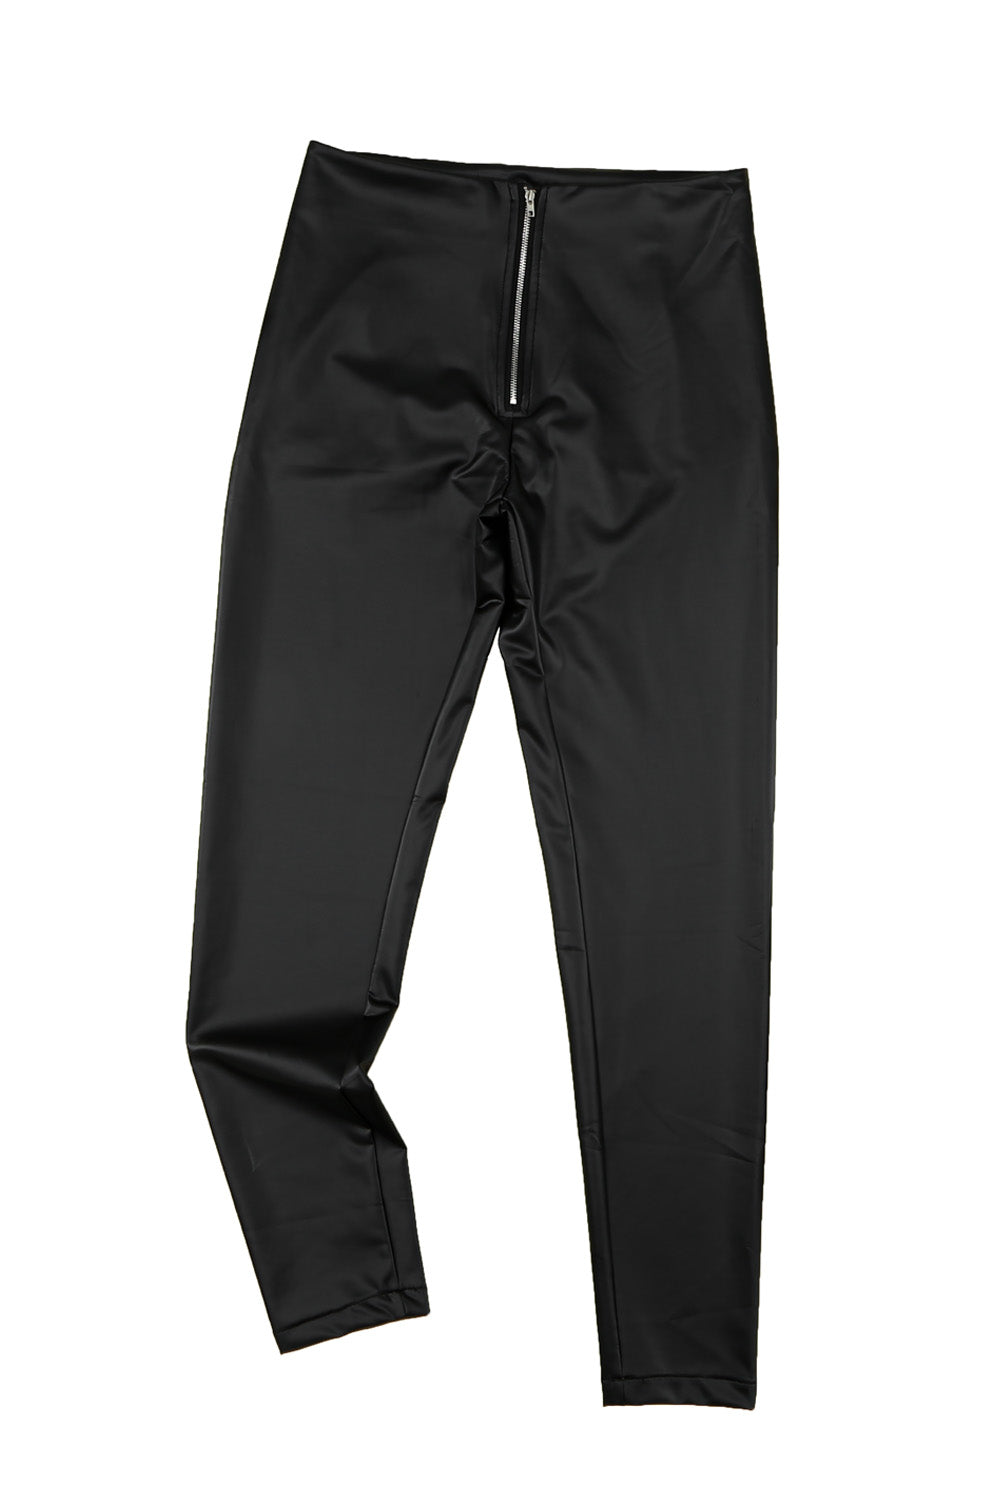 Black Solid Skinny Zipper Pu Pants